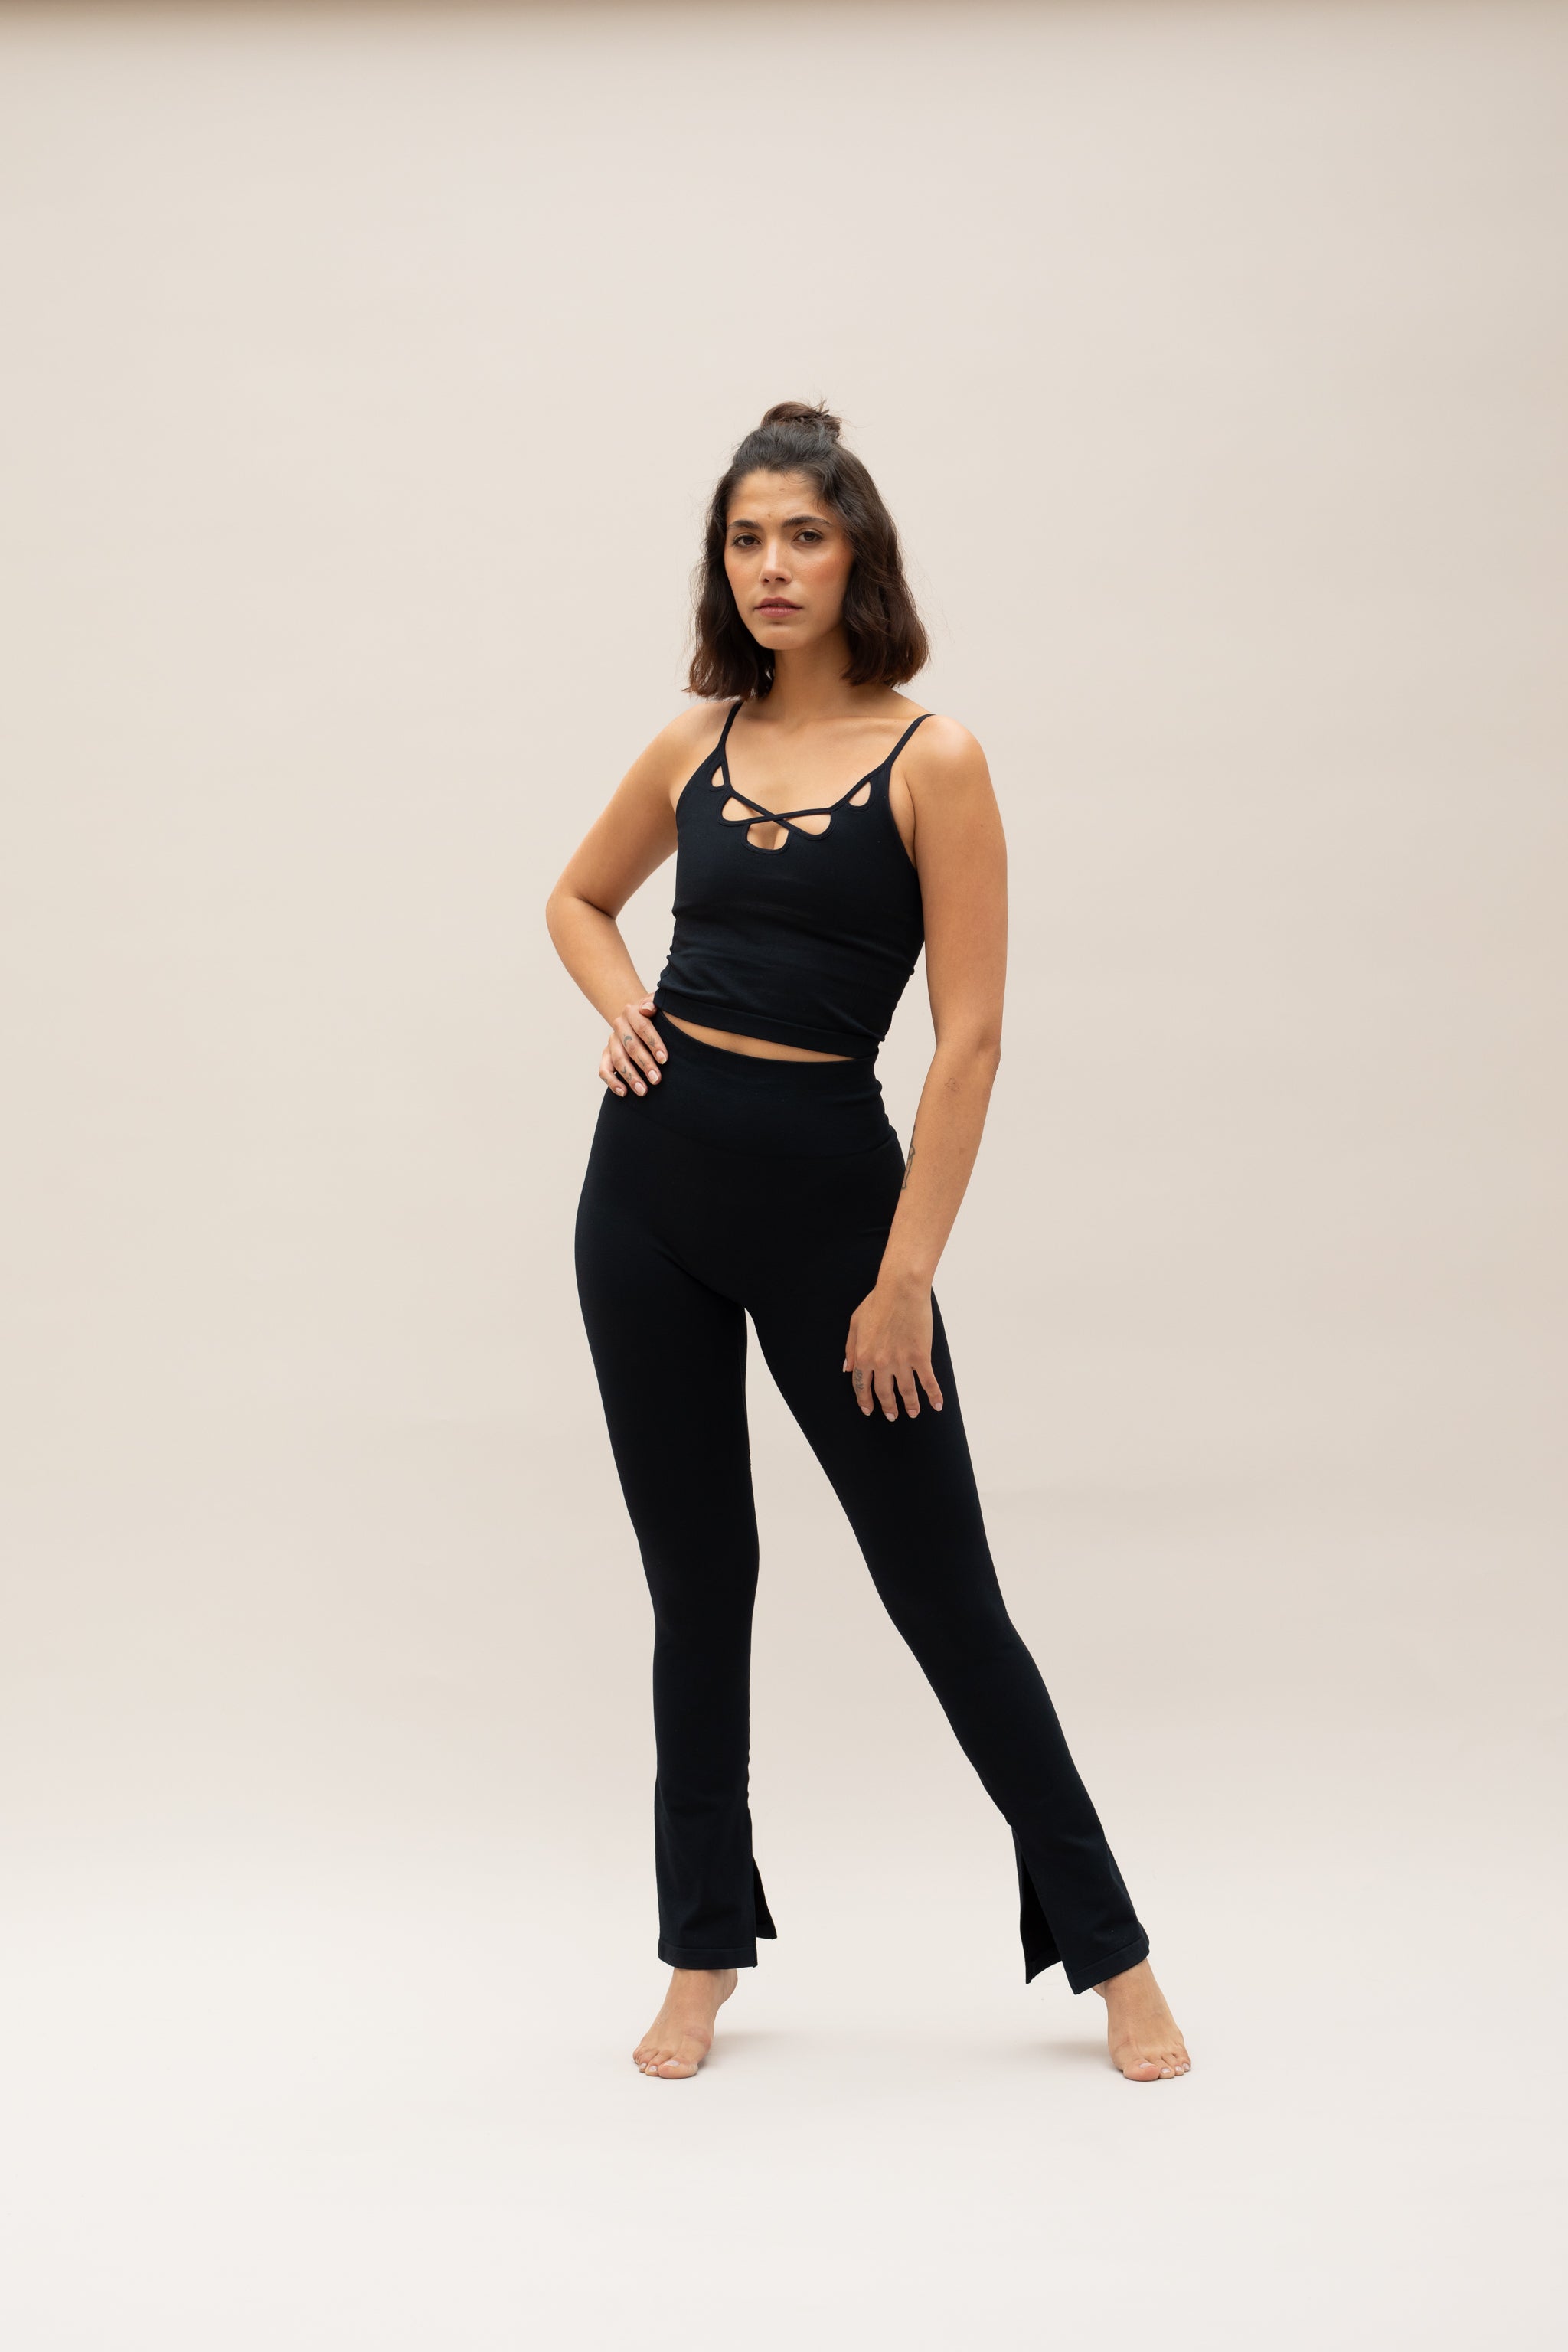 Model wearing black top and black leggings for sustainable activewear Jilla